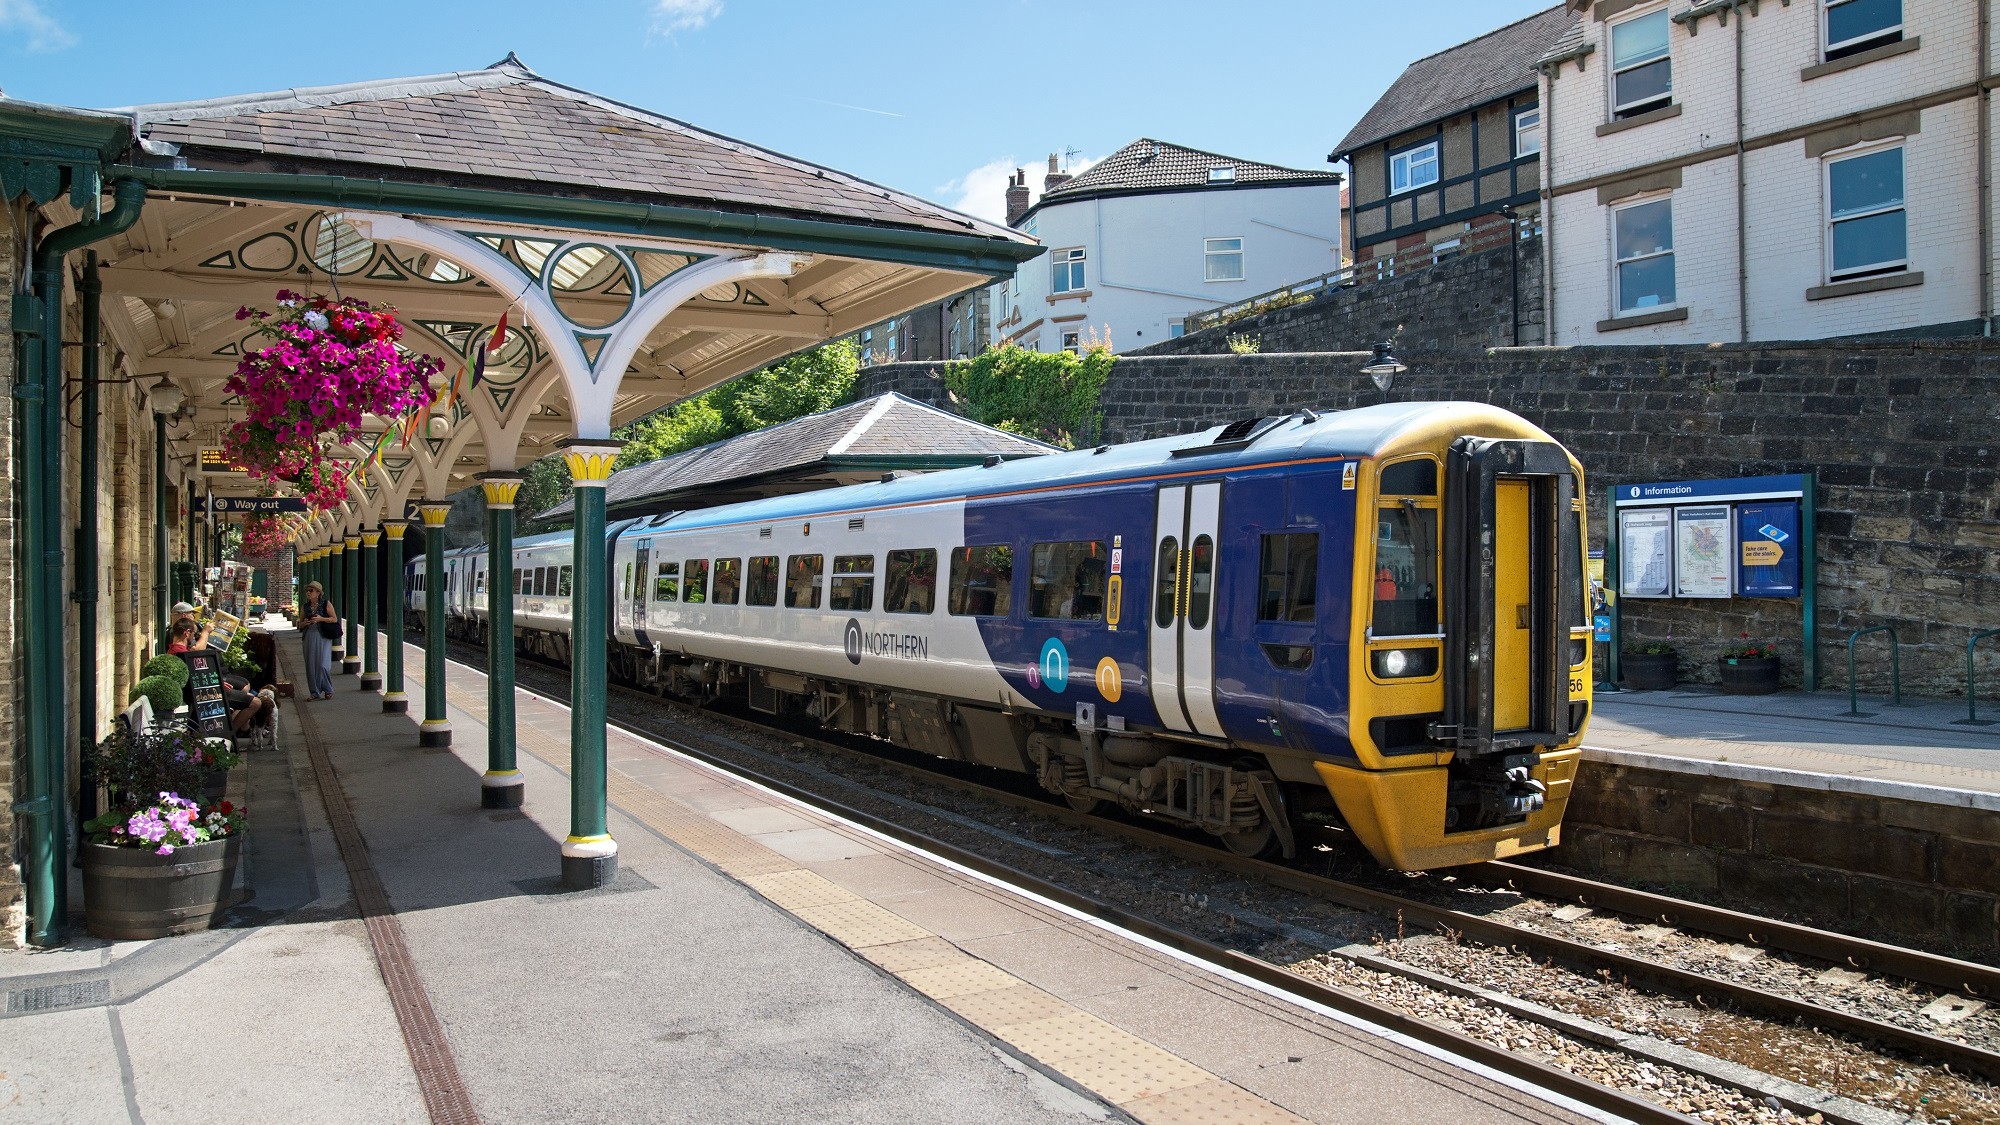 Image shows Northern train at Knaresborough station